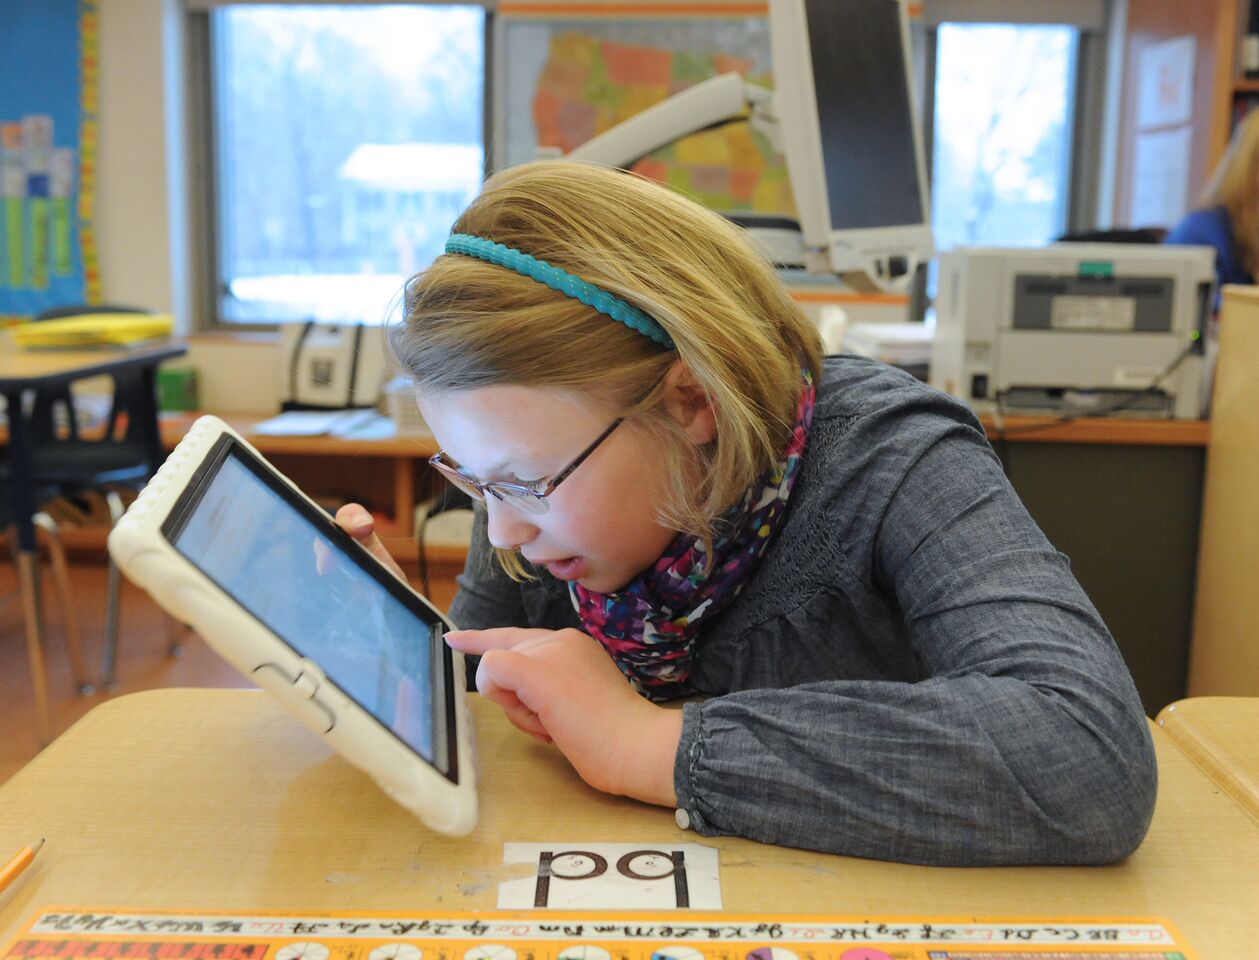 A girl with low vision examines an iPad at close range